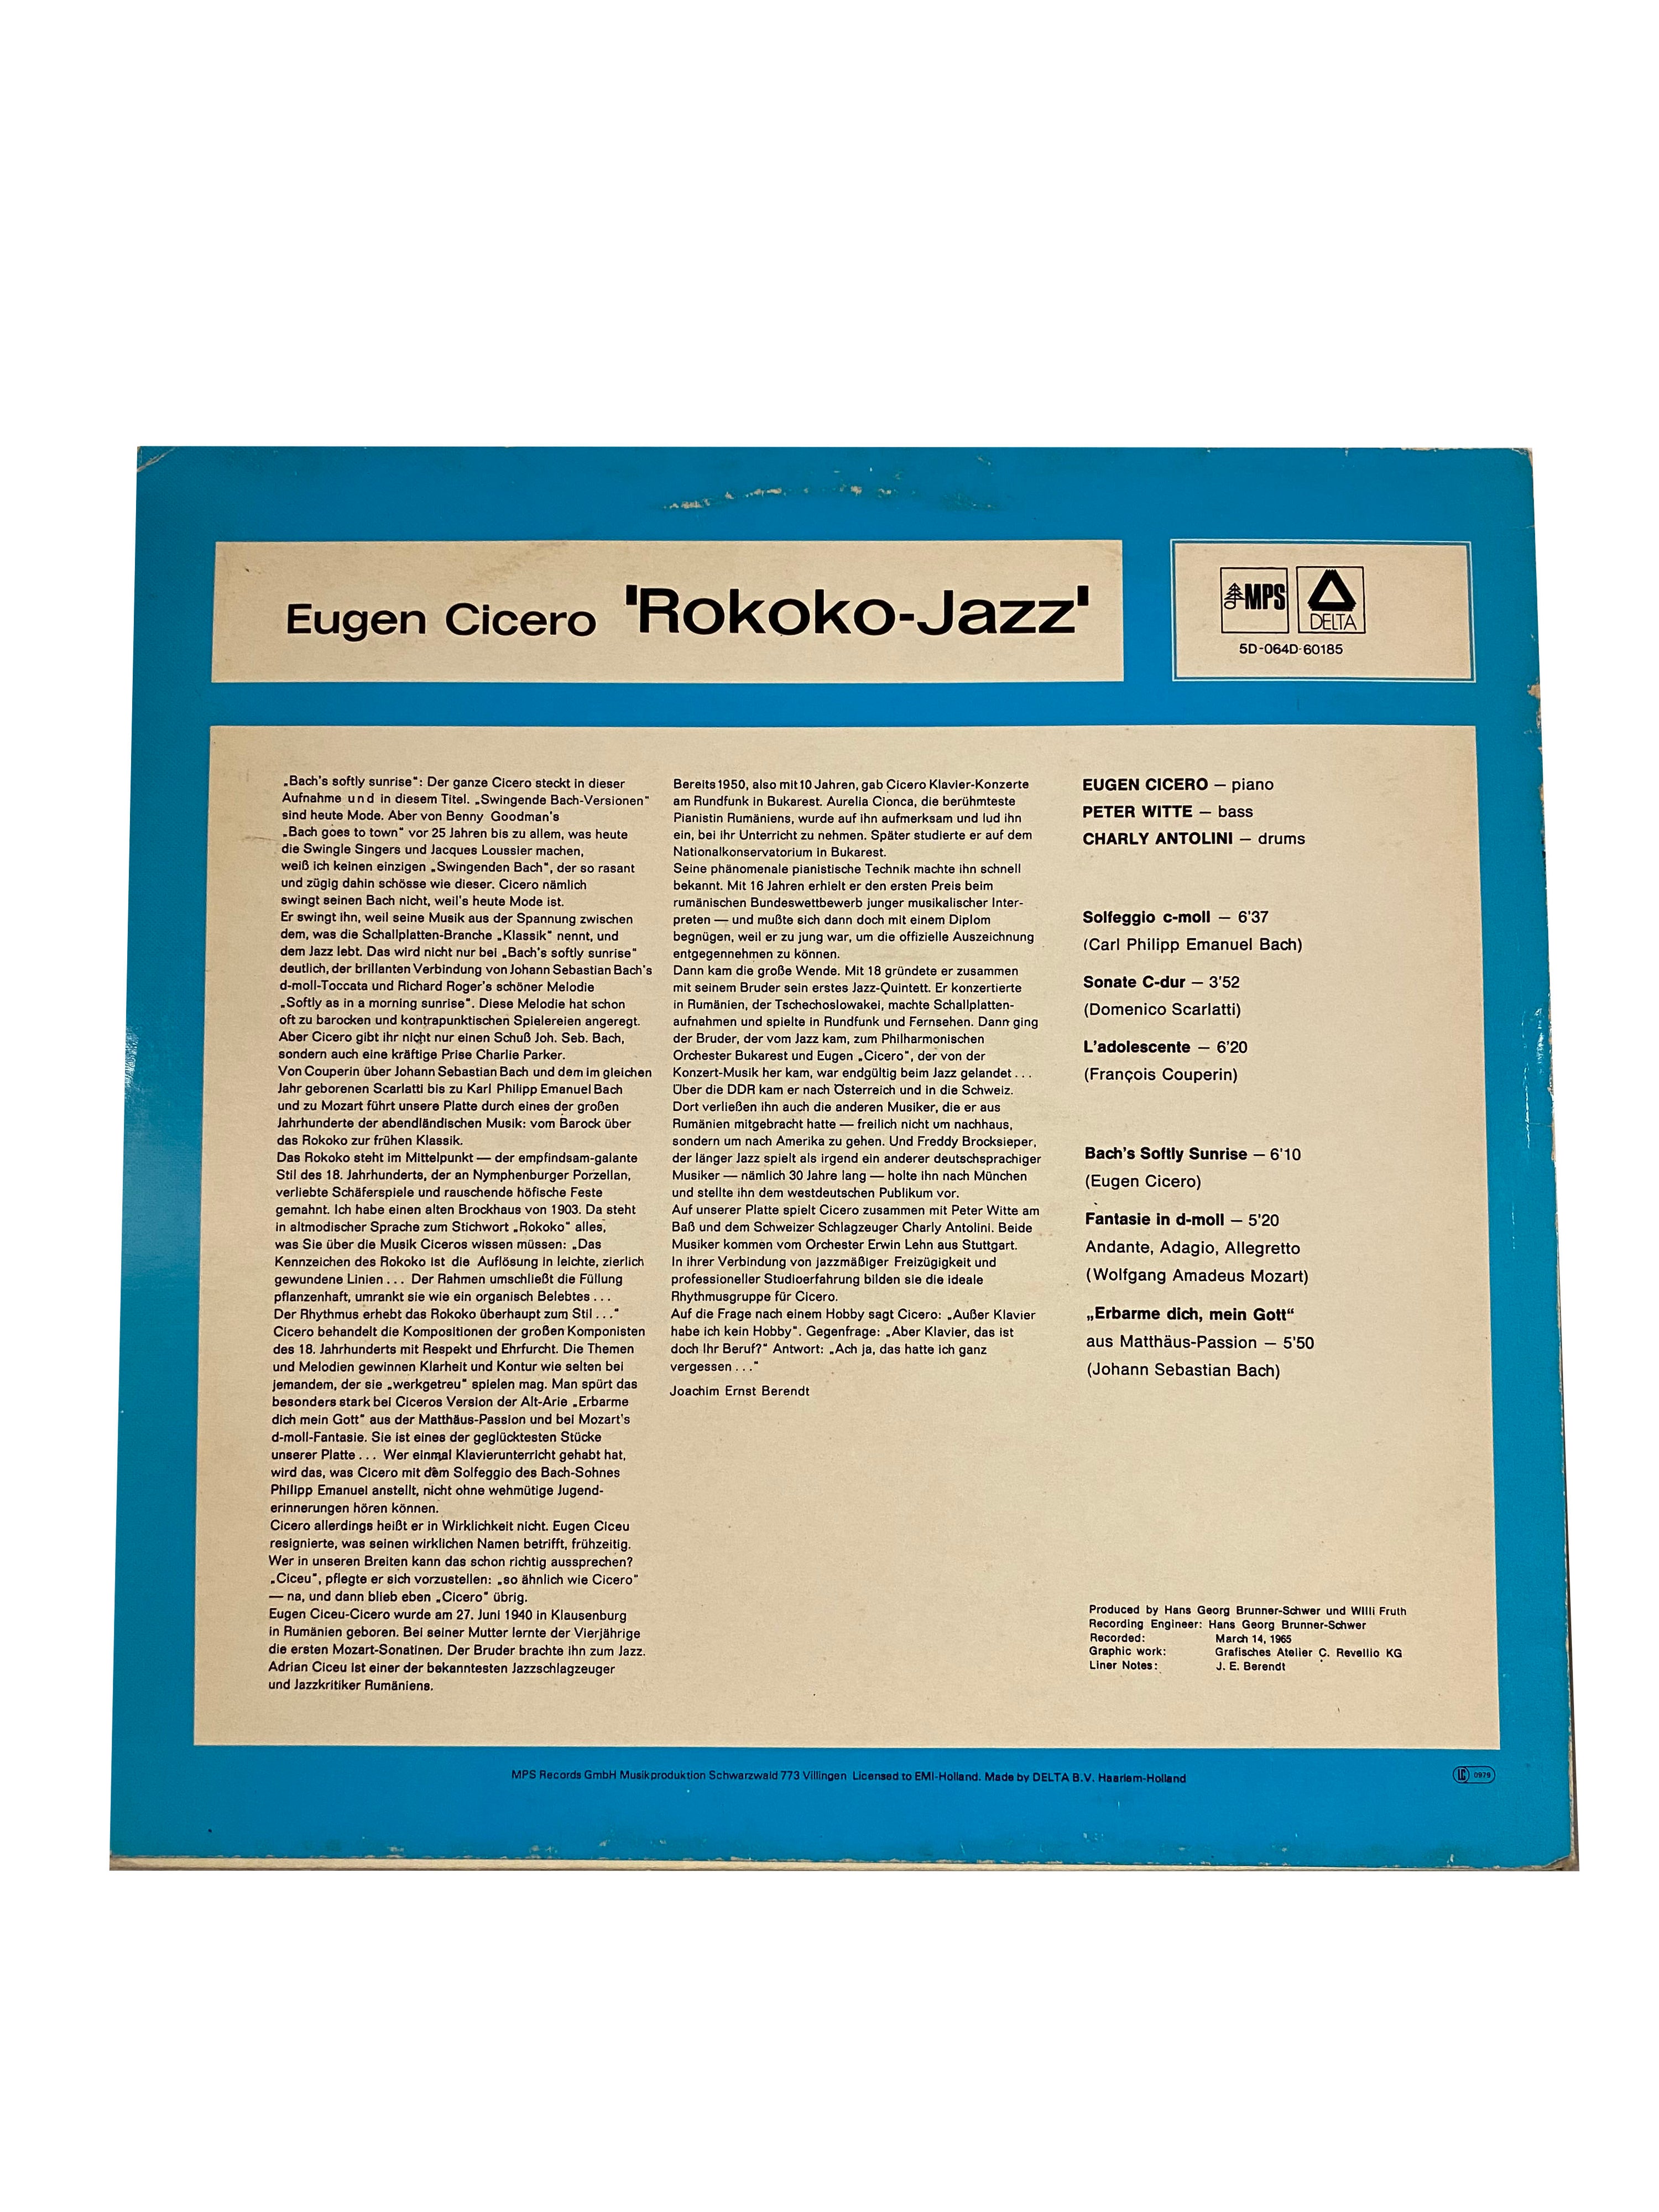 Rokoko Jazz (LP; ALBUM) by Eugen Cicero